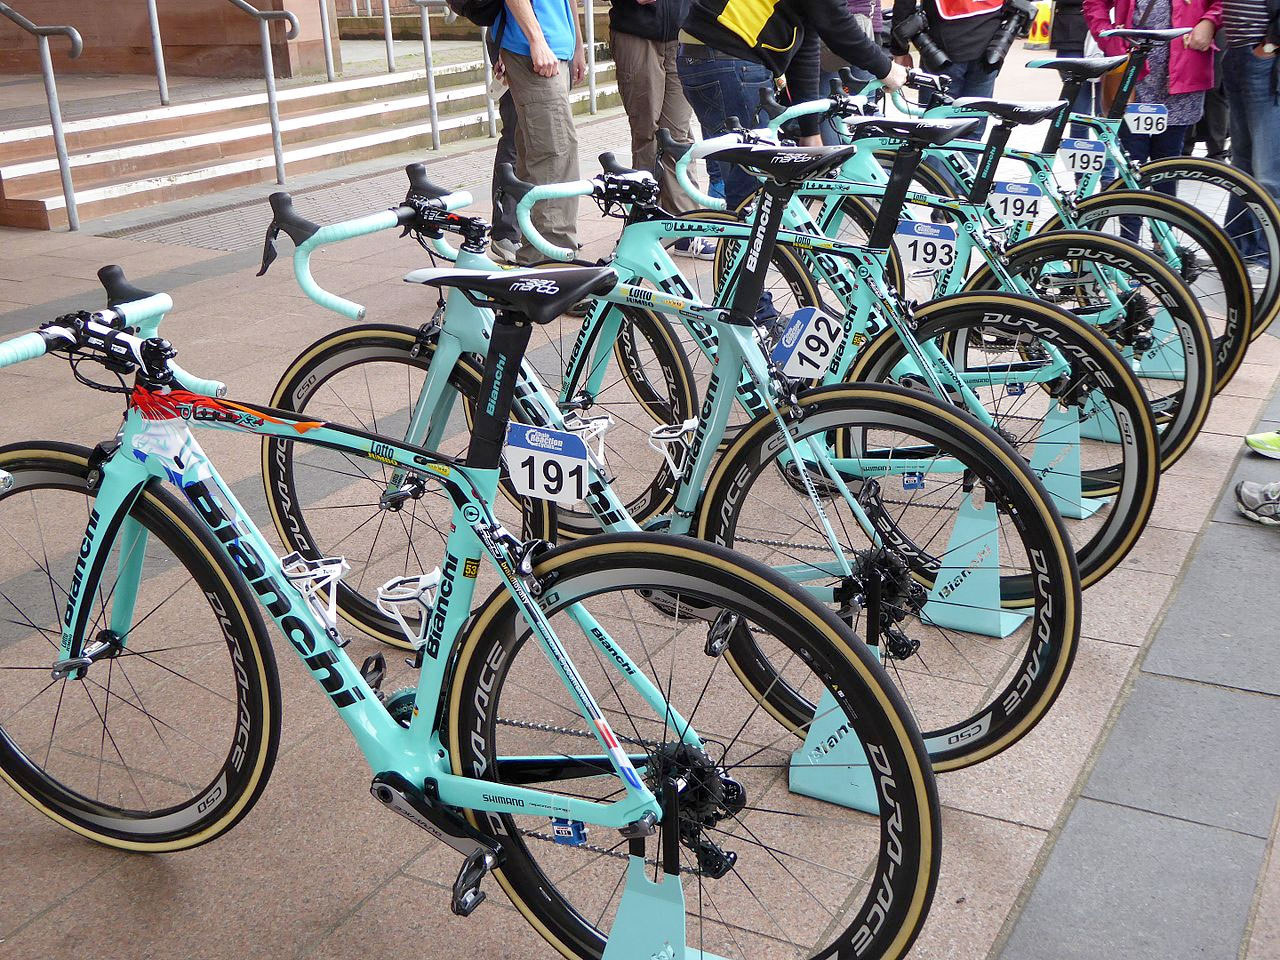 Bianchi Team LottoNL-Jumbo bikes